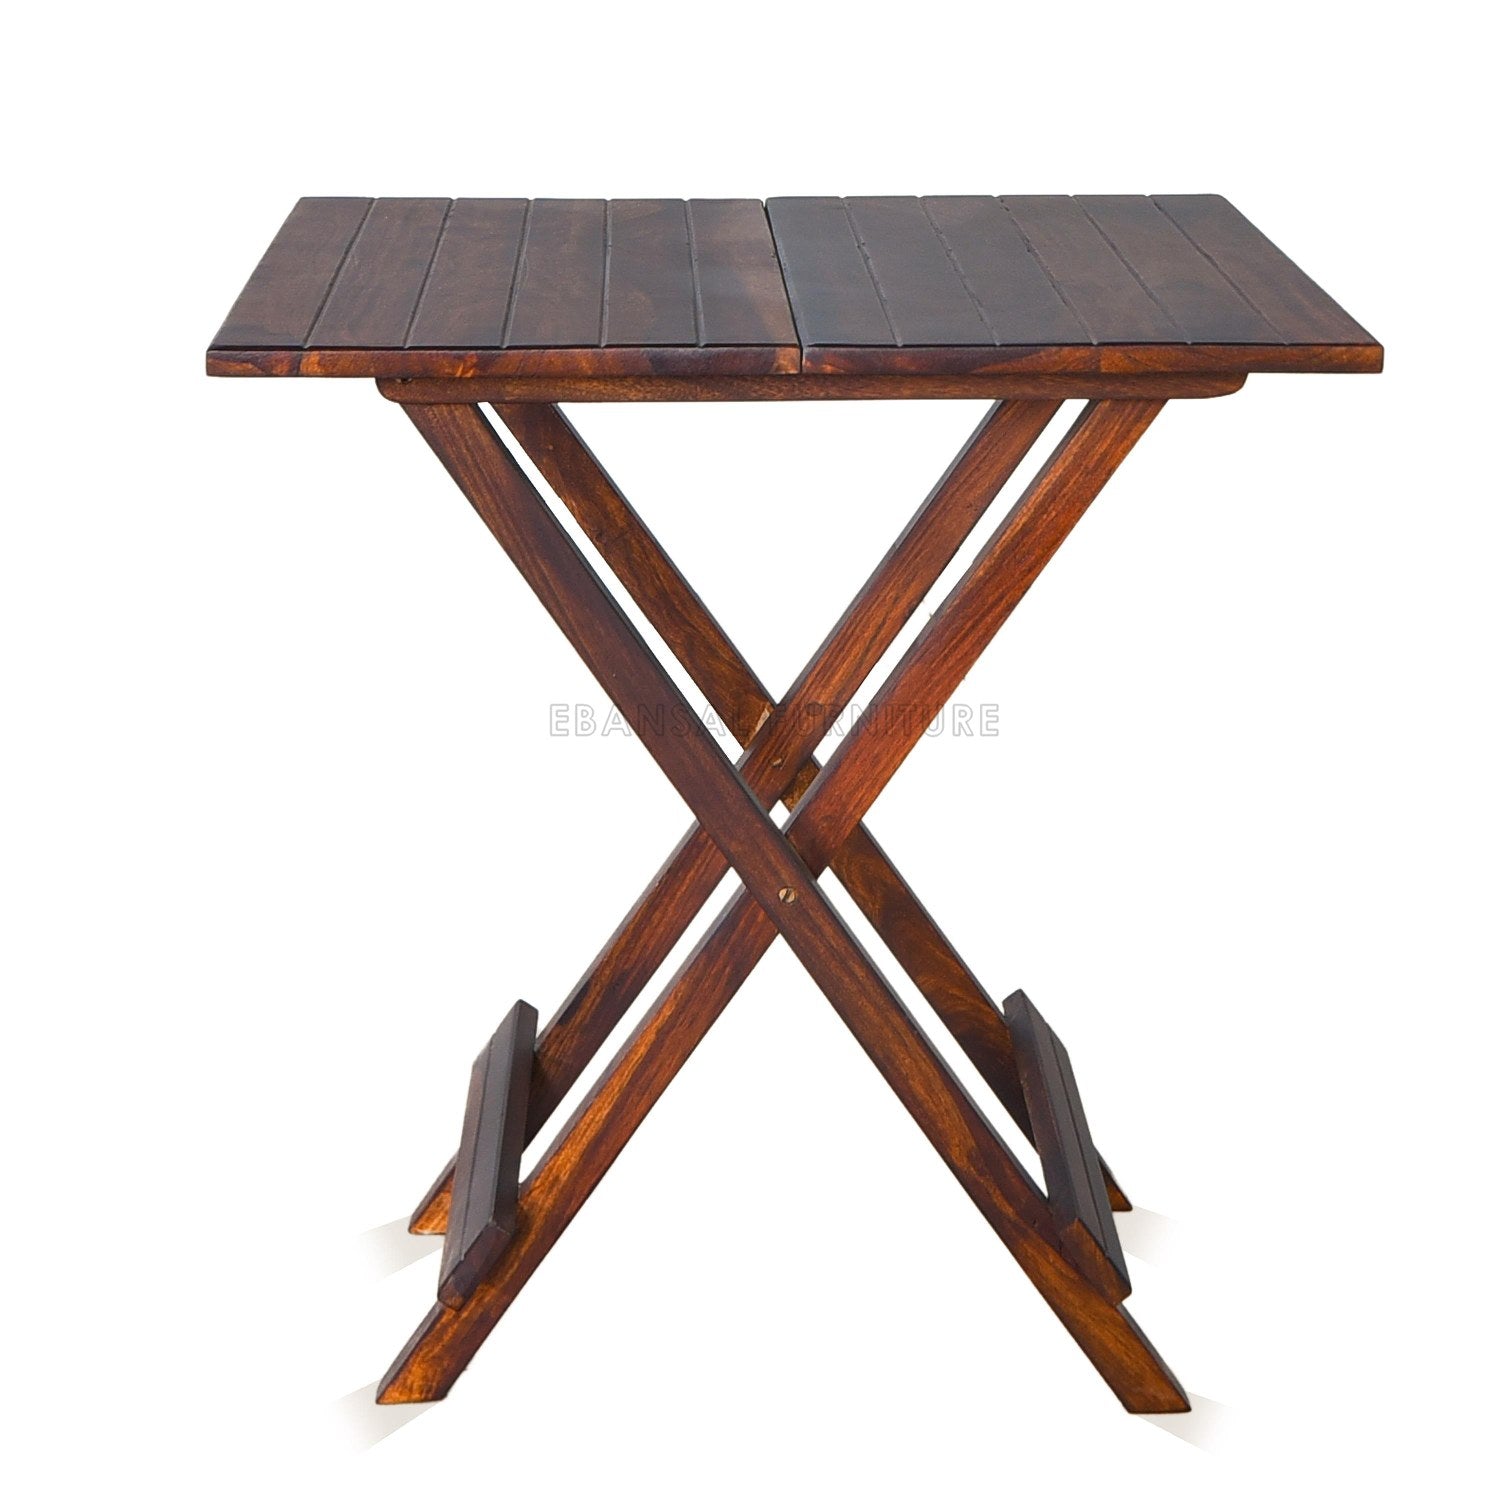 Dumdum Solid Sheesham Wood Foldable Balcony Chairs and Table Set (Natural Finish)